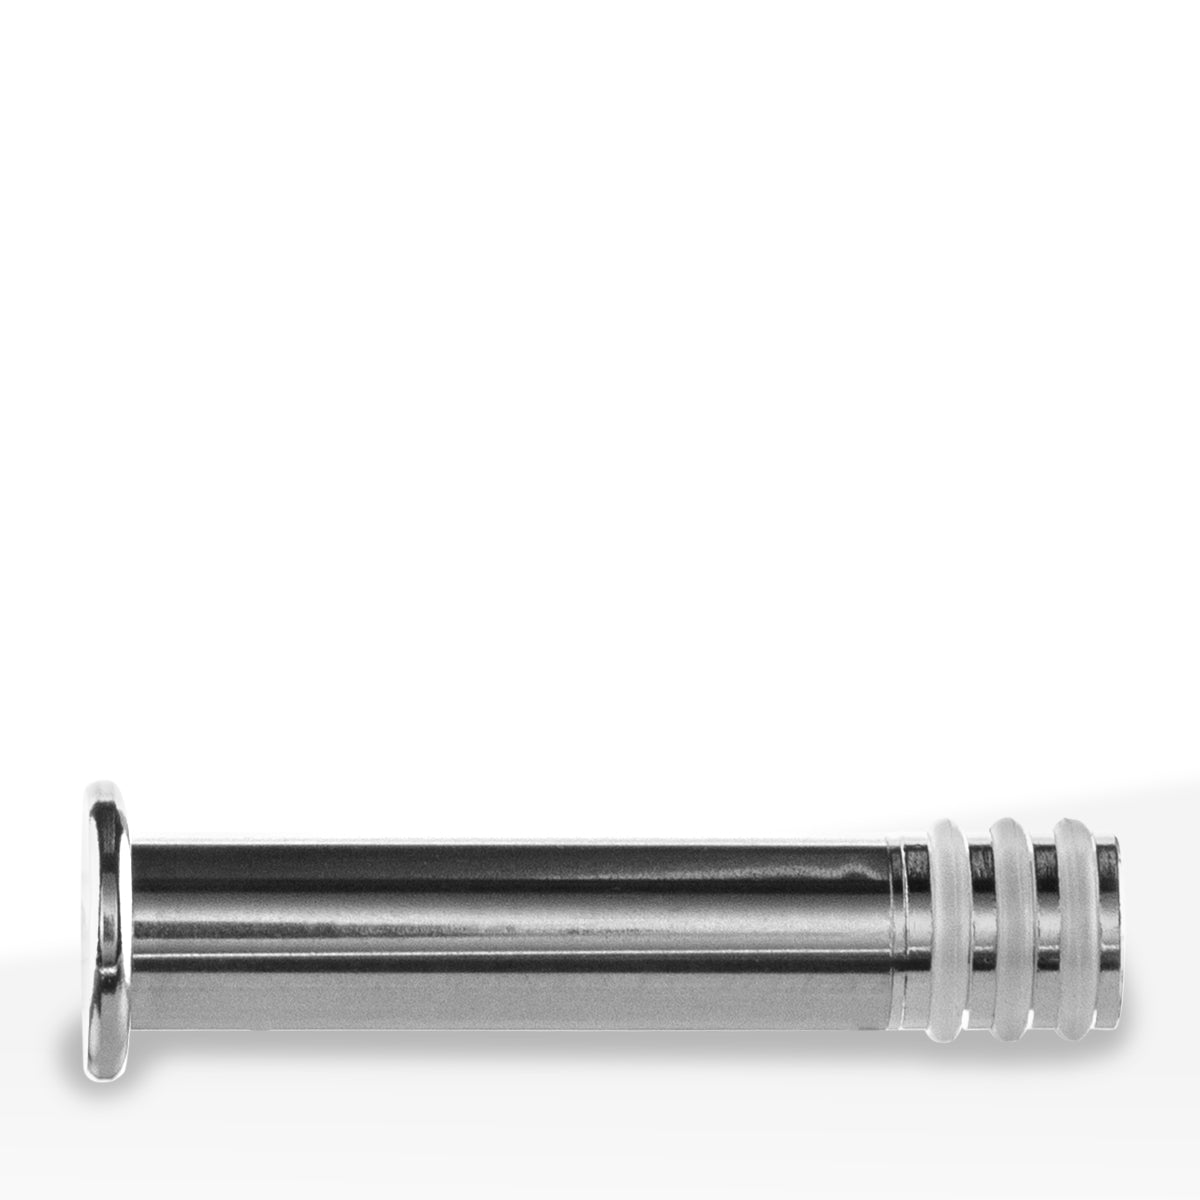 Syringe Part | Stainless Steel Plunger for 1mL Syringe | 100 Count